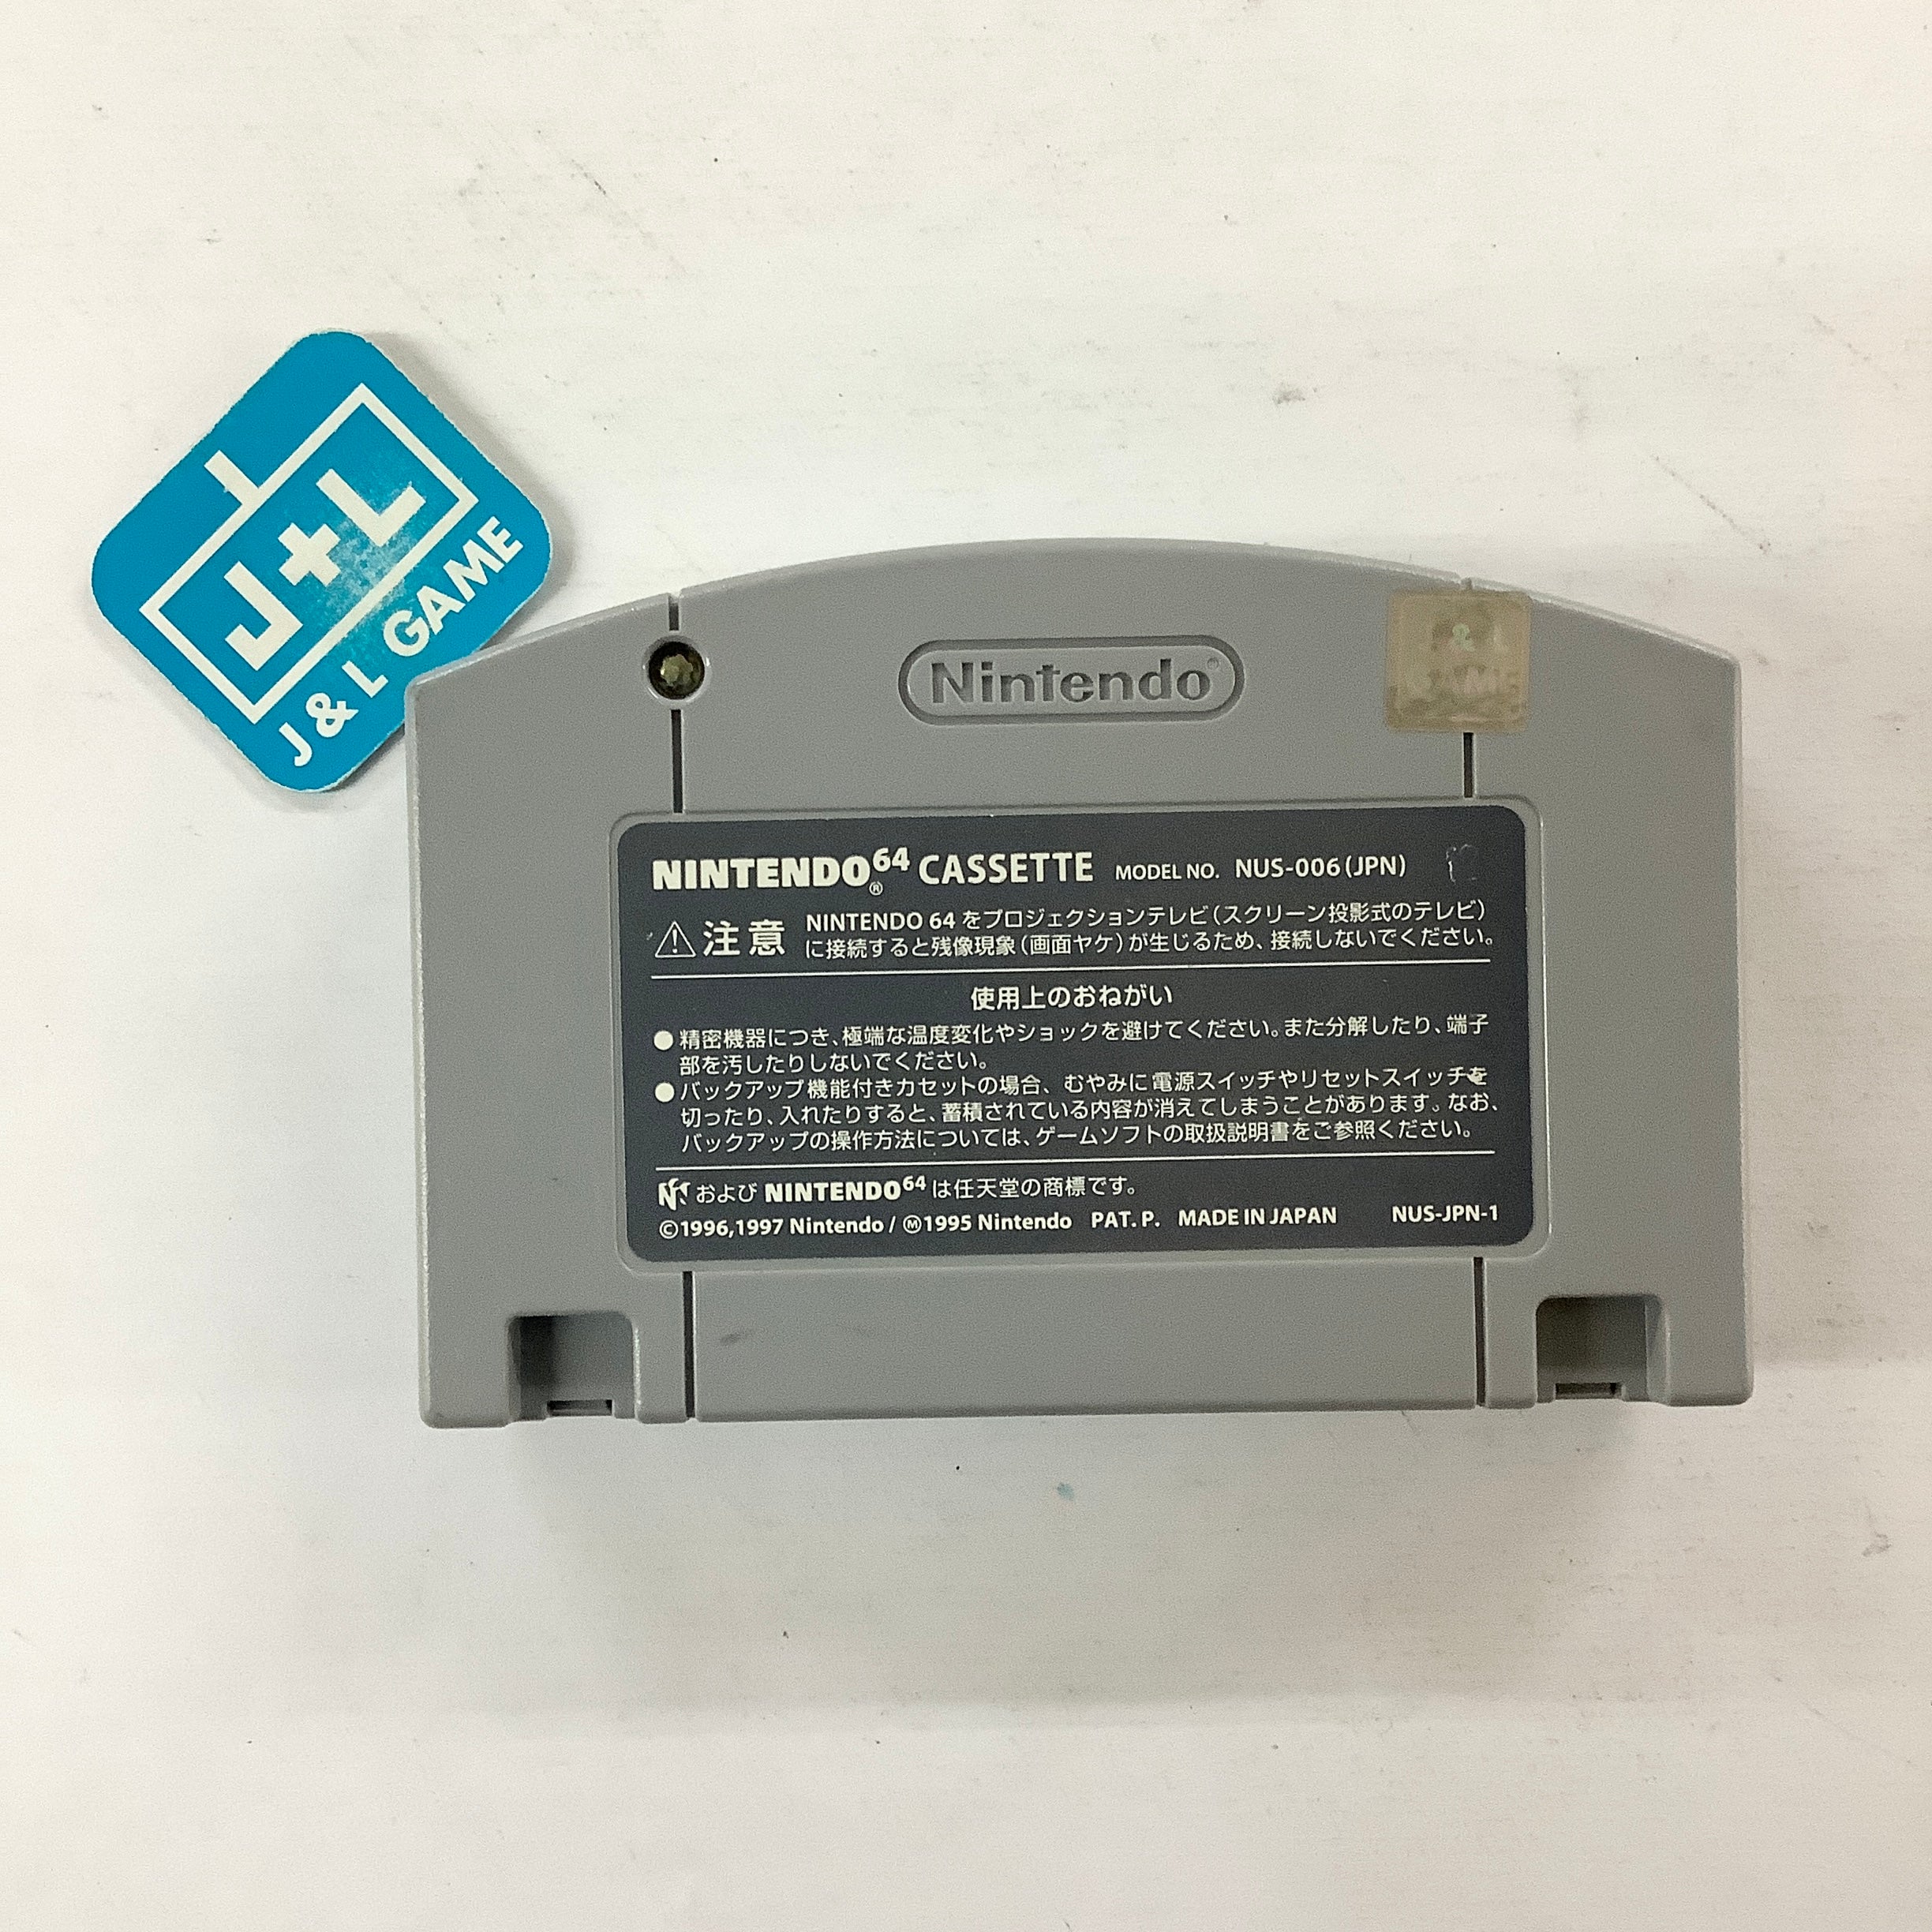 Bomberman Hero: Milian Oujo o Sukue! - (N64) Nintendo 64 [Pre-Owned] (Japanese Import) Video Games Hudson   